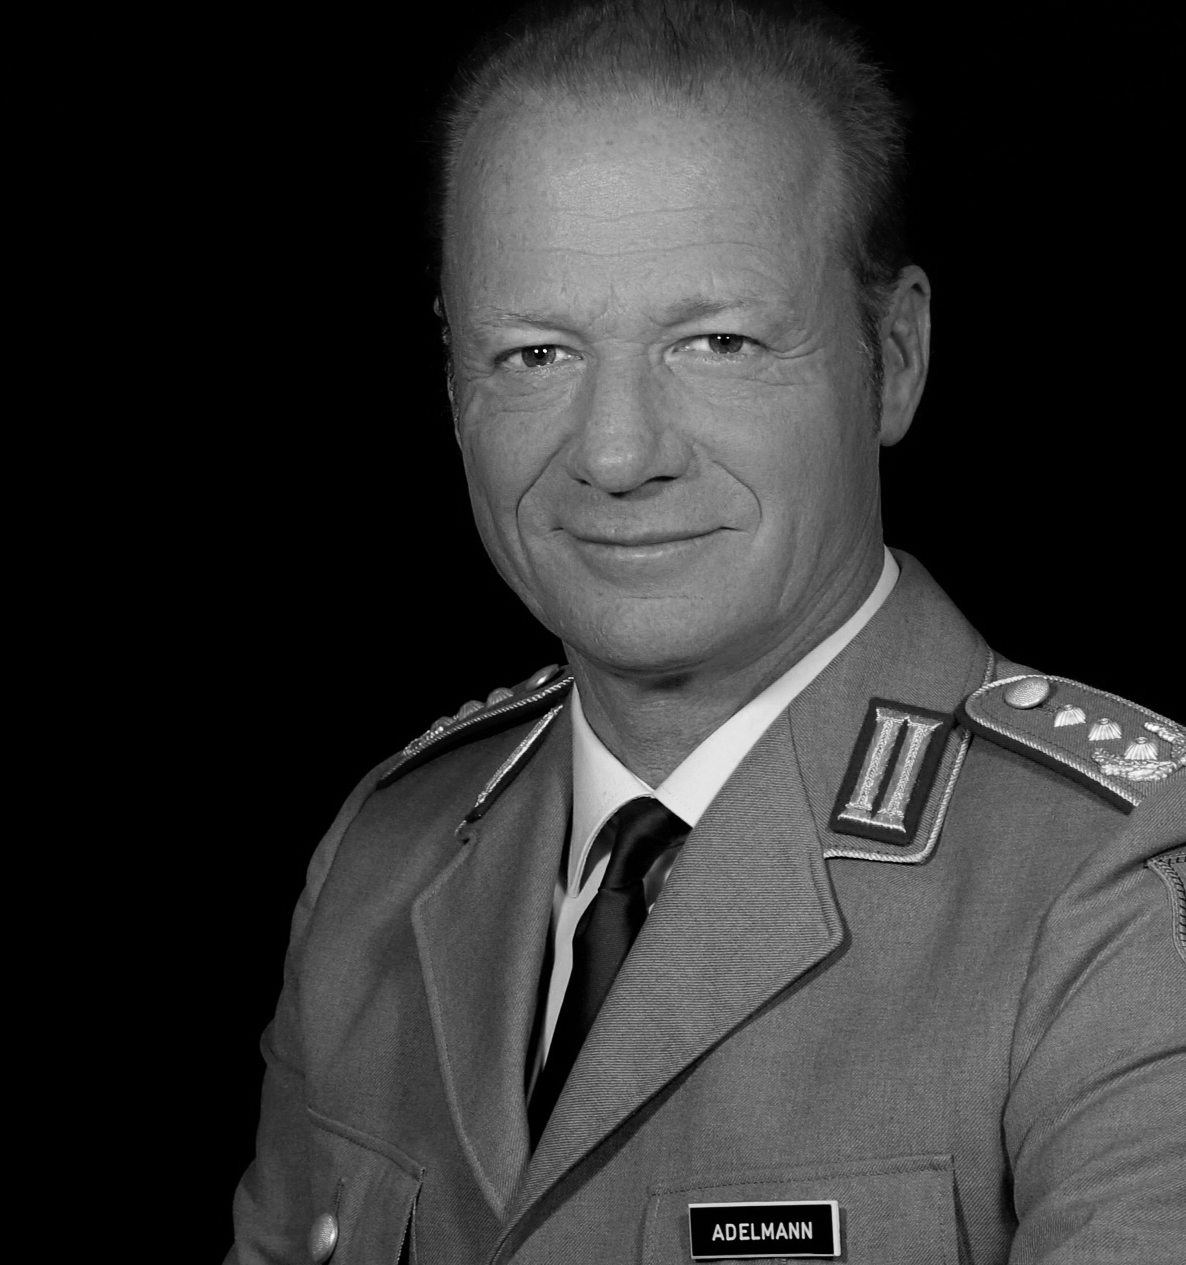 Oberst Adelmann